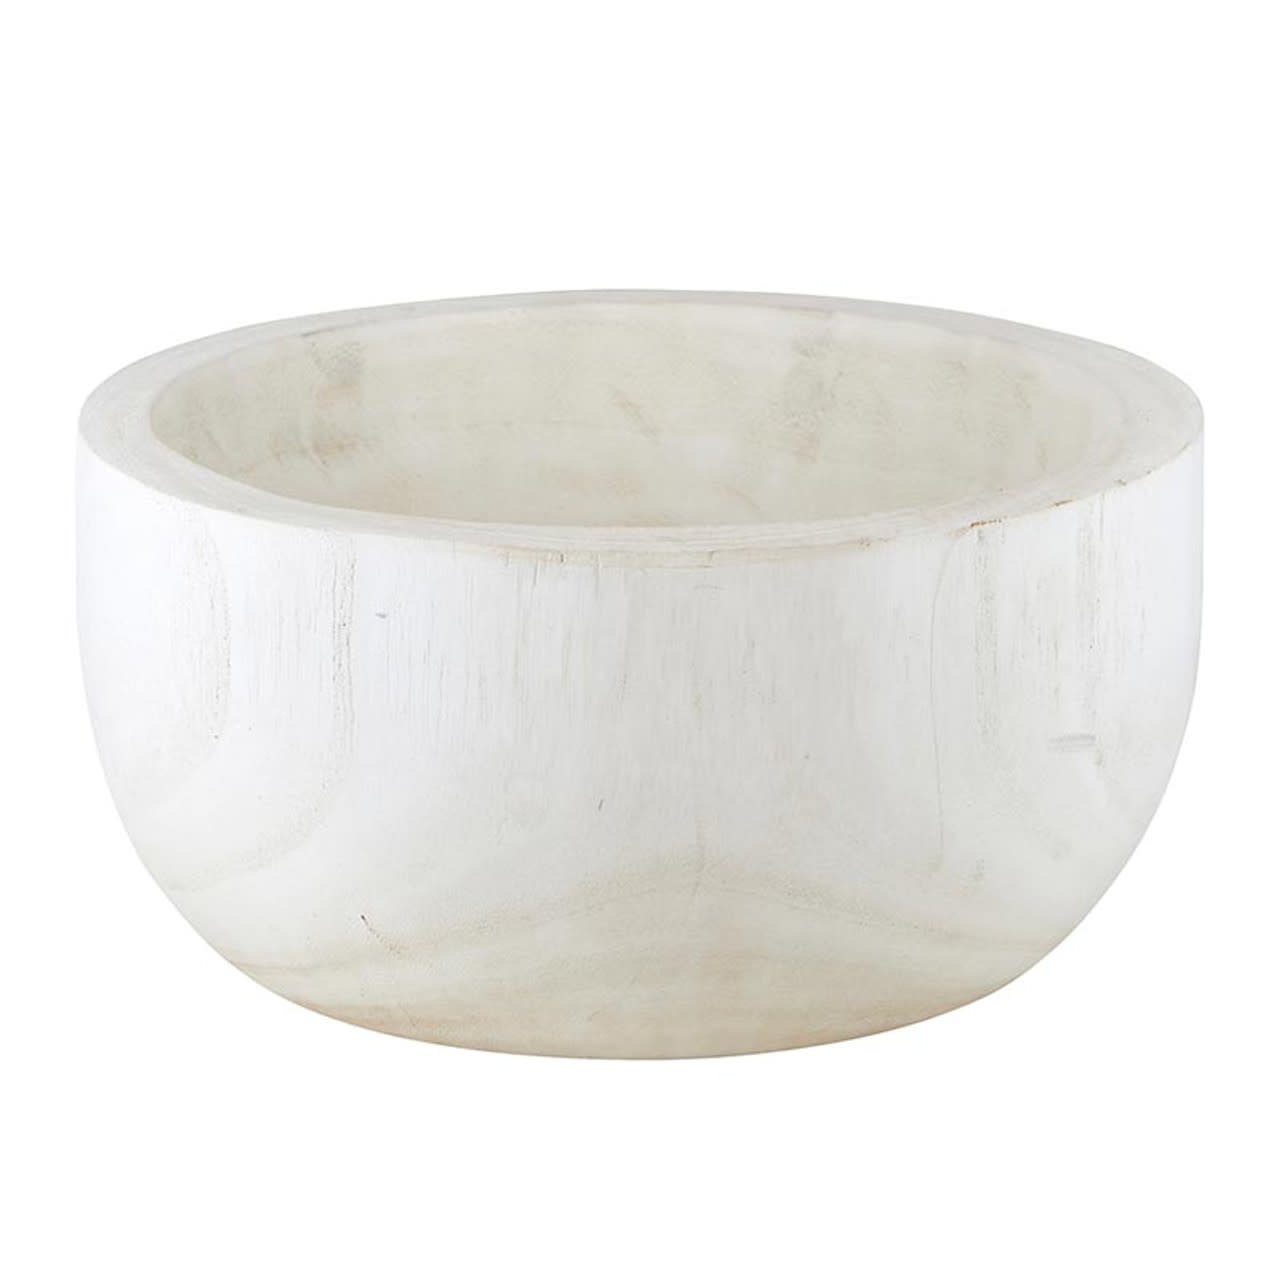 Paulownia Wood Serving Bowl, White